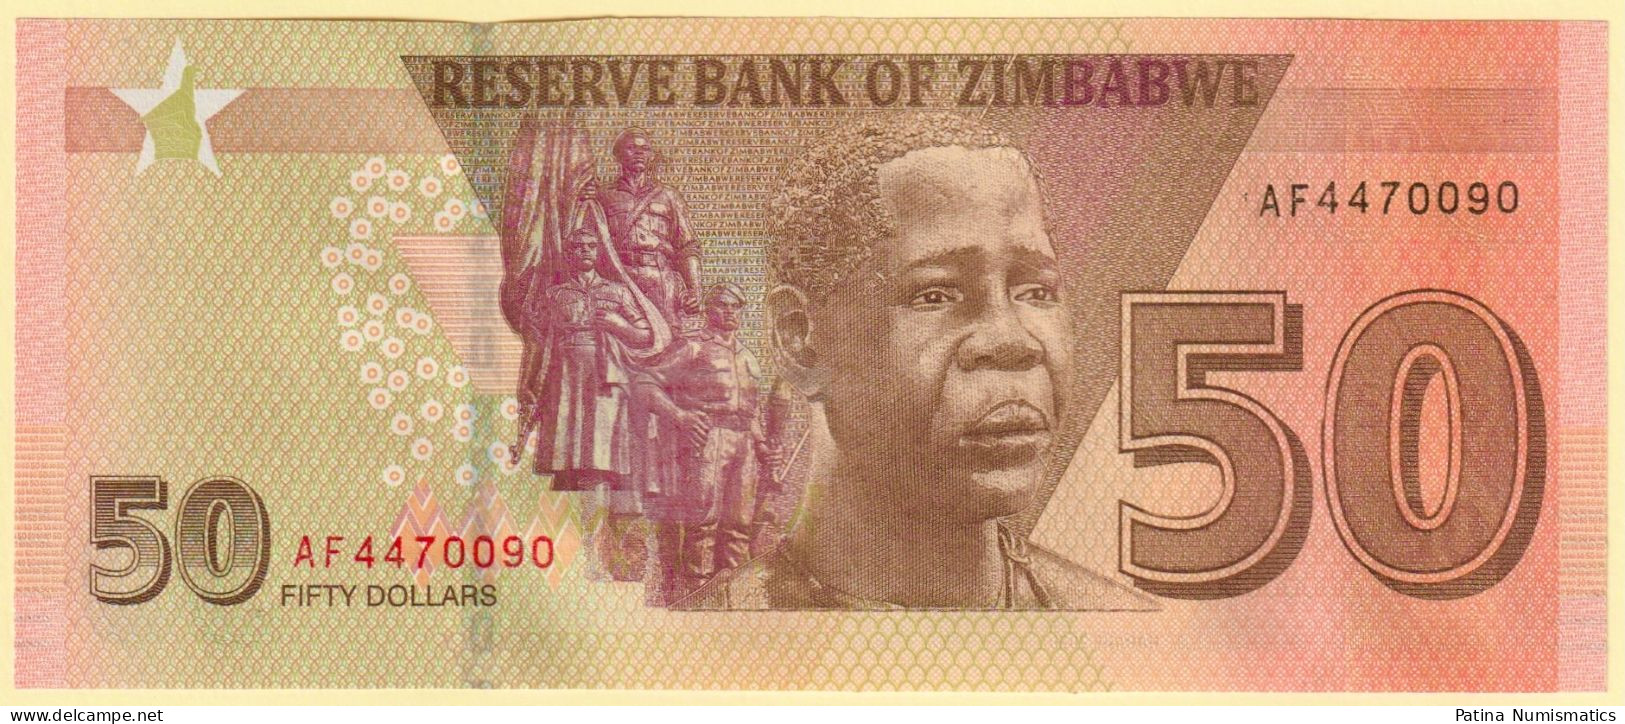 Zimbabwe 50 Dollars 2020 Unknown Soldier P 105 AF Prefix Crisp UNC - Zimbabwe